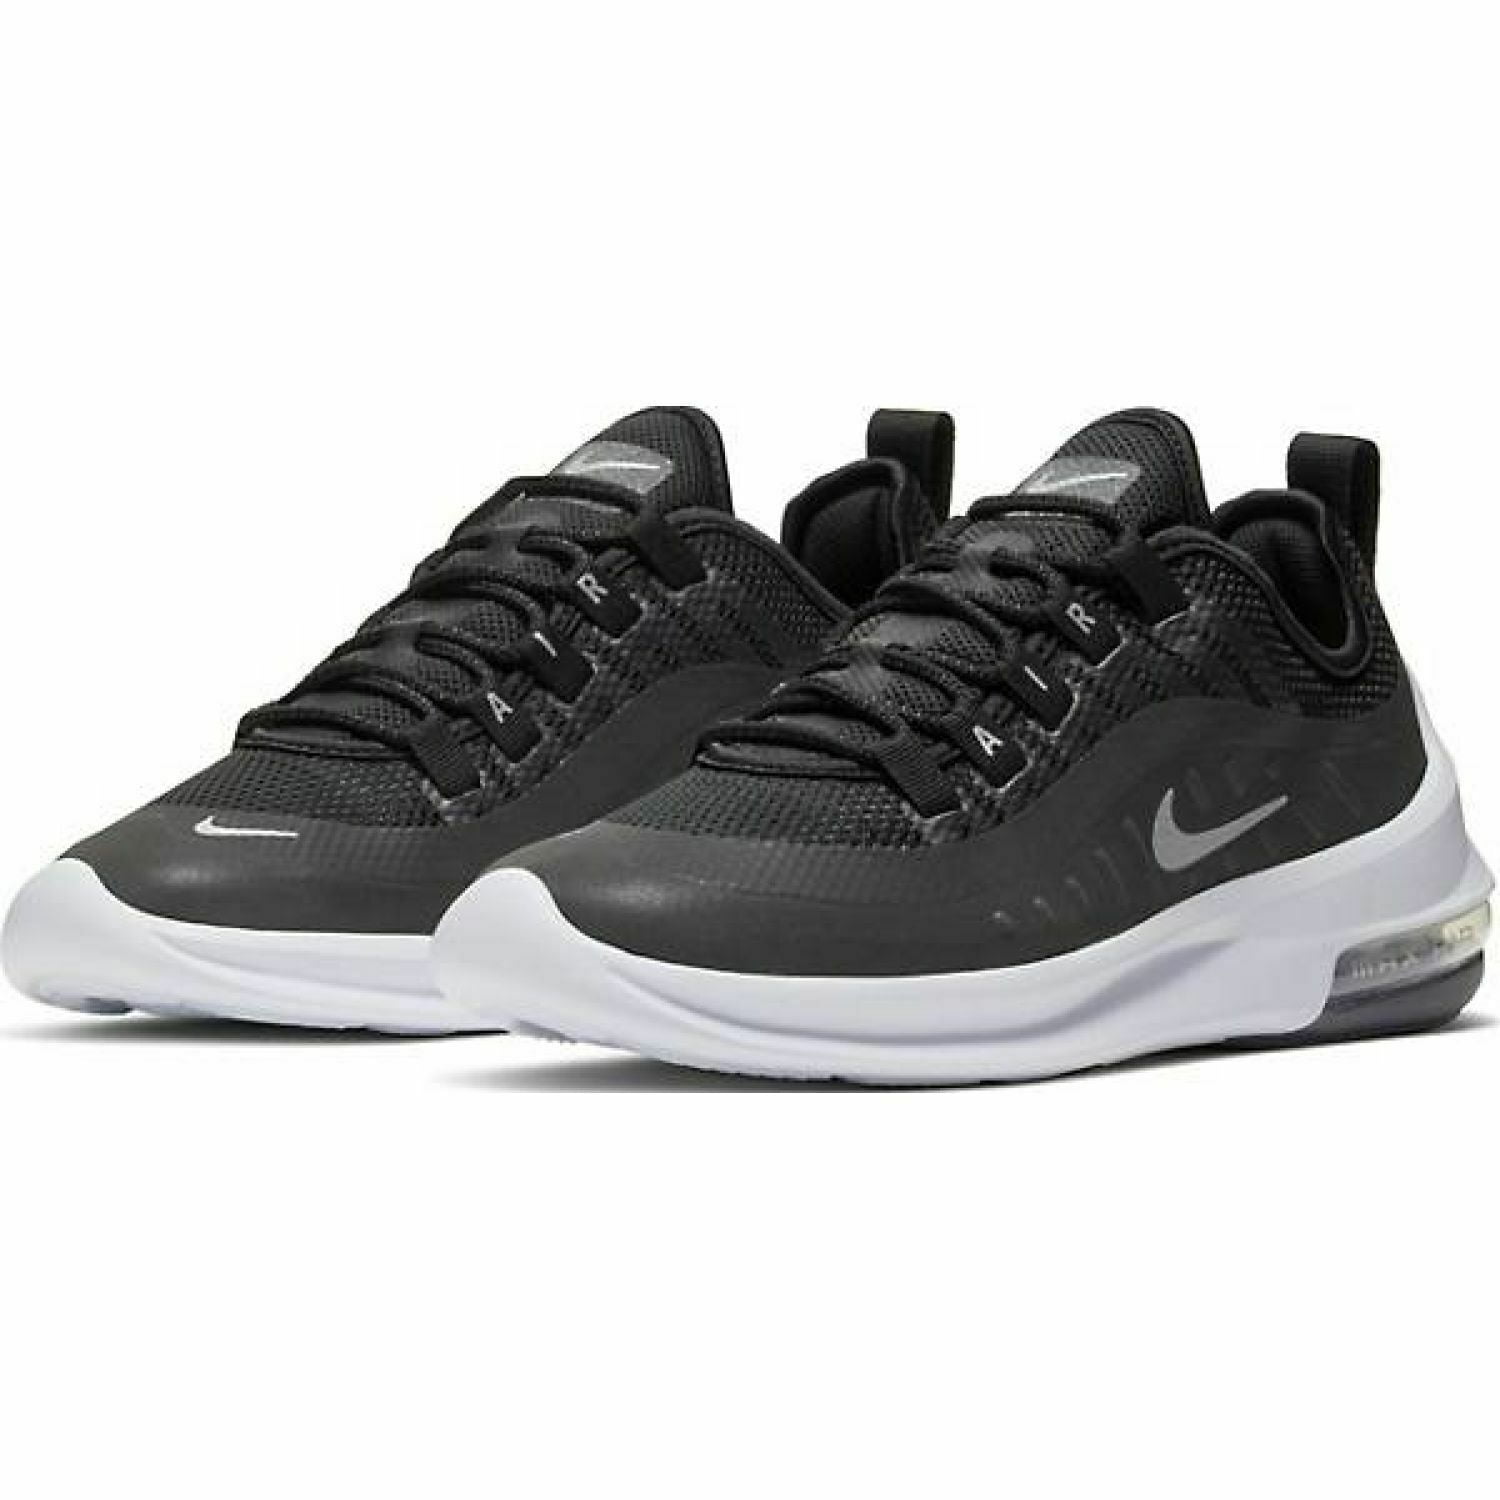 Nike Air Max Axis Premium BQ0126-003 Women's Black Athletic Shoes TV513 (8.5) - Walmart.com